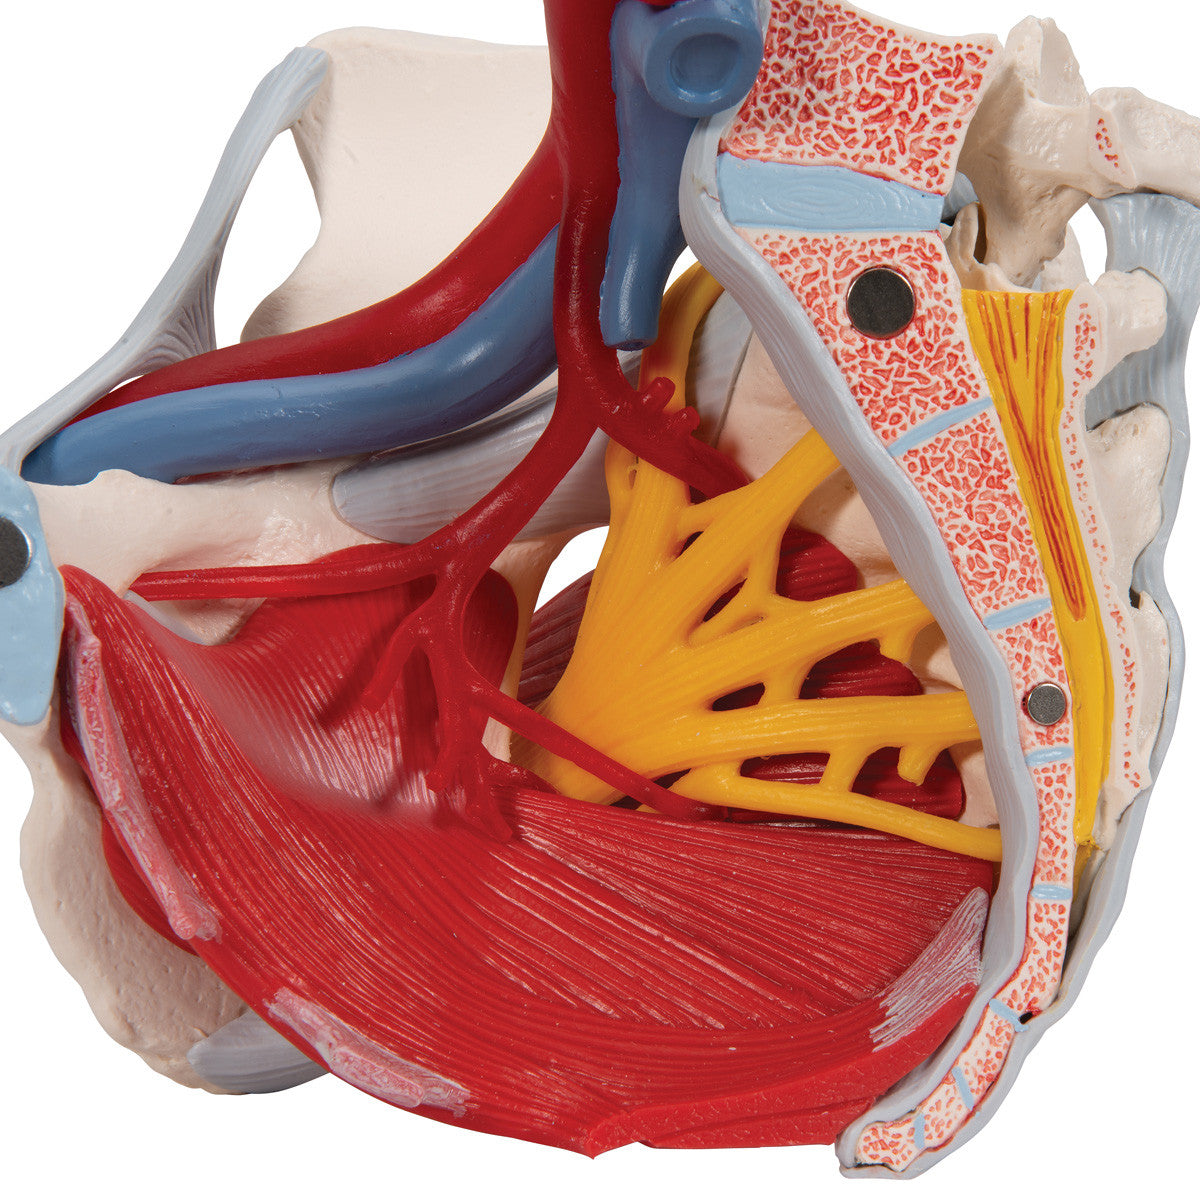 Human Female Pelvis Skeleton Model with Ligaments, Vessels, Nerves, Pelvic Floor Muscles & Organs, 6 part | 3B Scientific H20/4